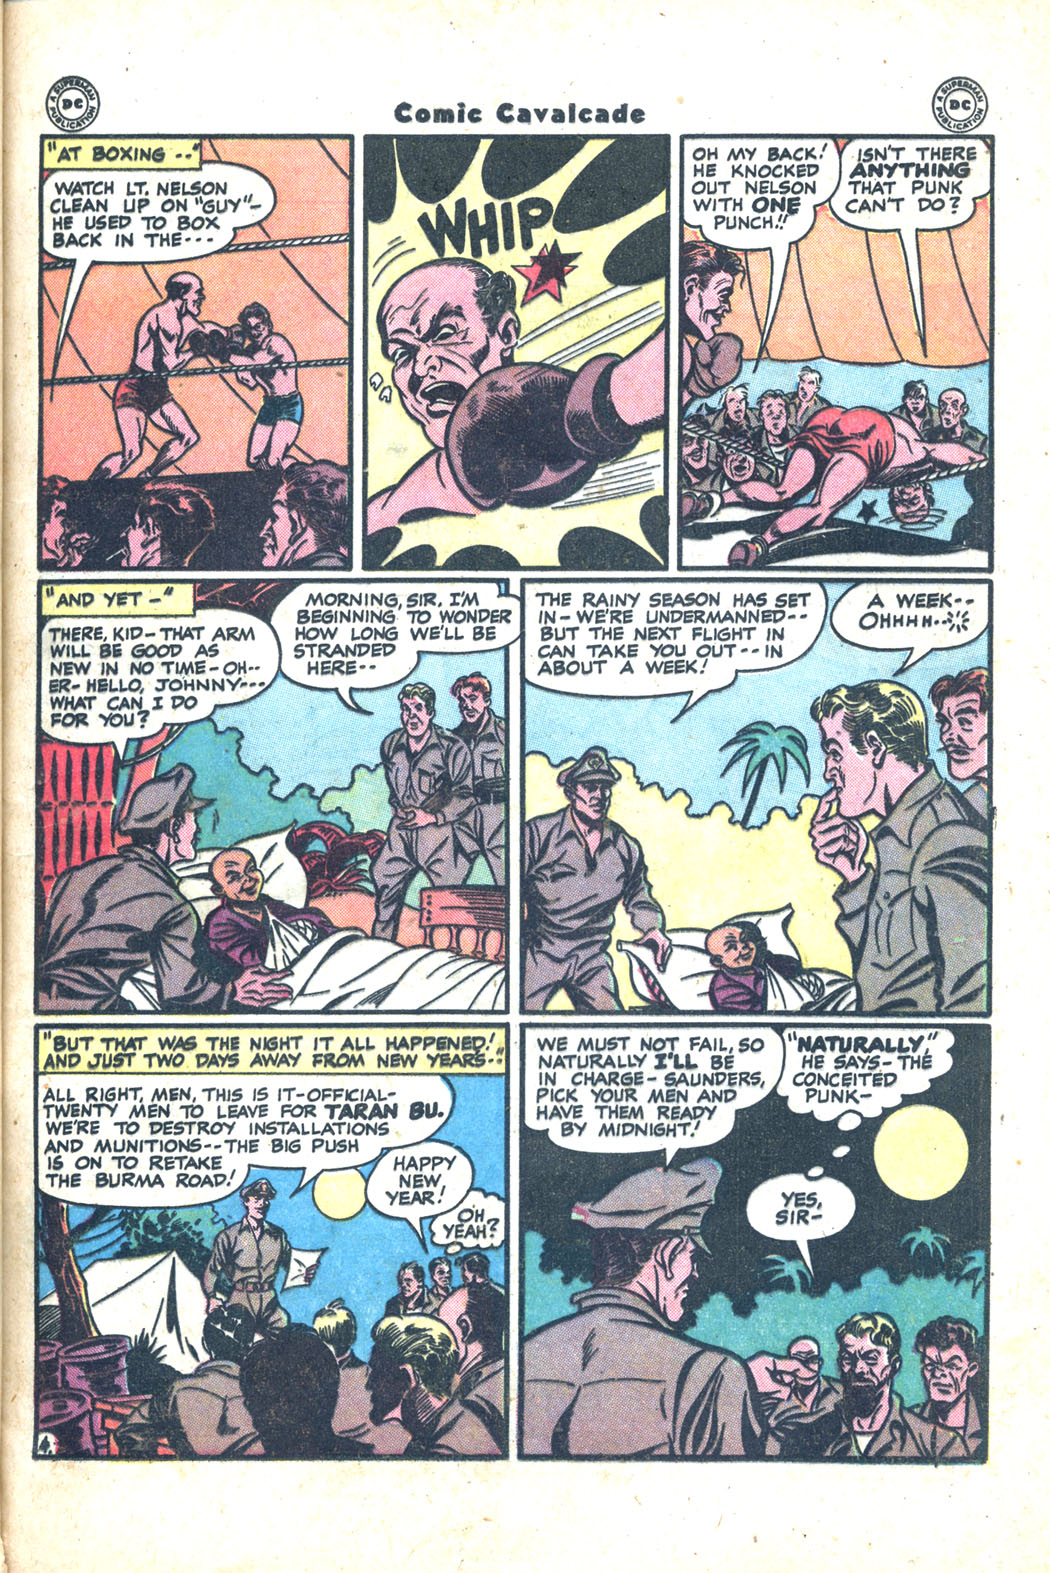 Comic Cavalcade issue 23 - Page 25